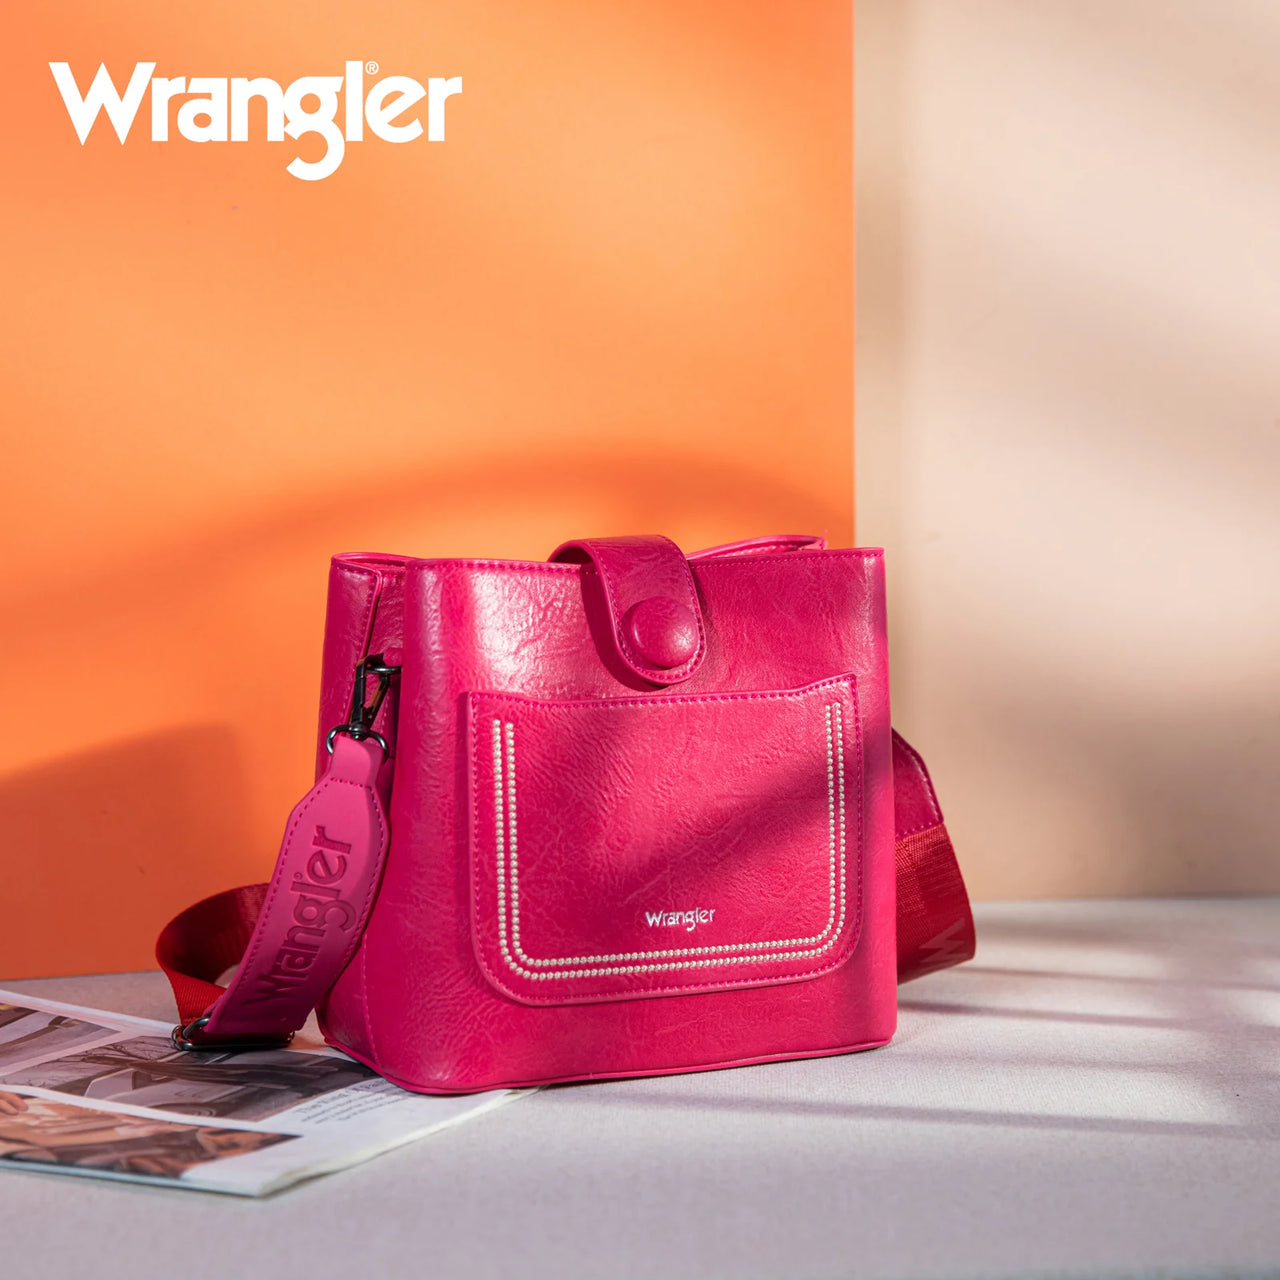 Wrangler Women's Hobo Crossbody/Shoulder Bag - Hot Pink